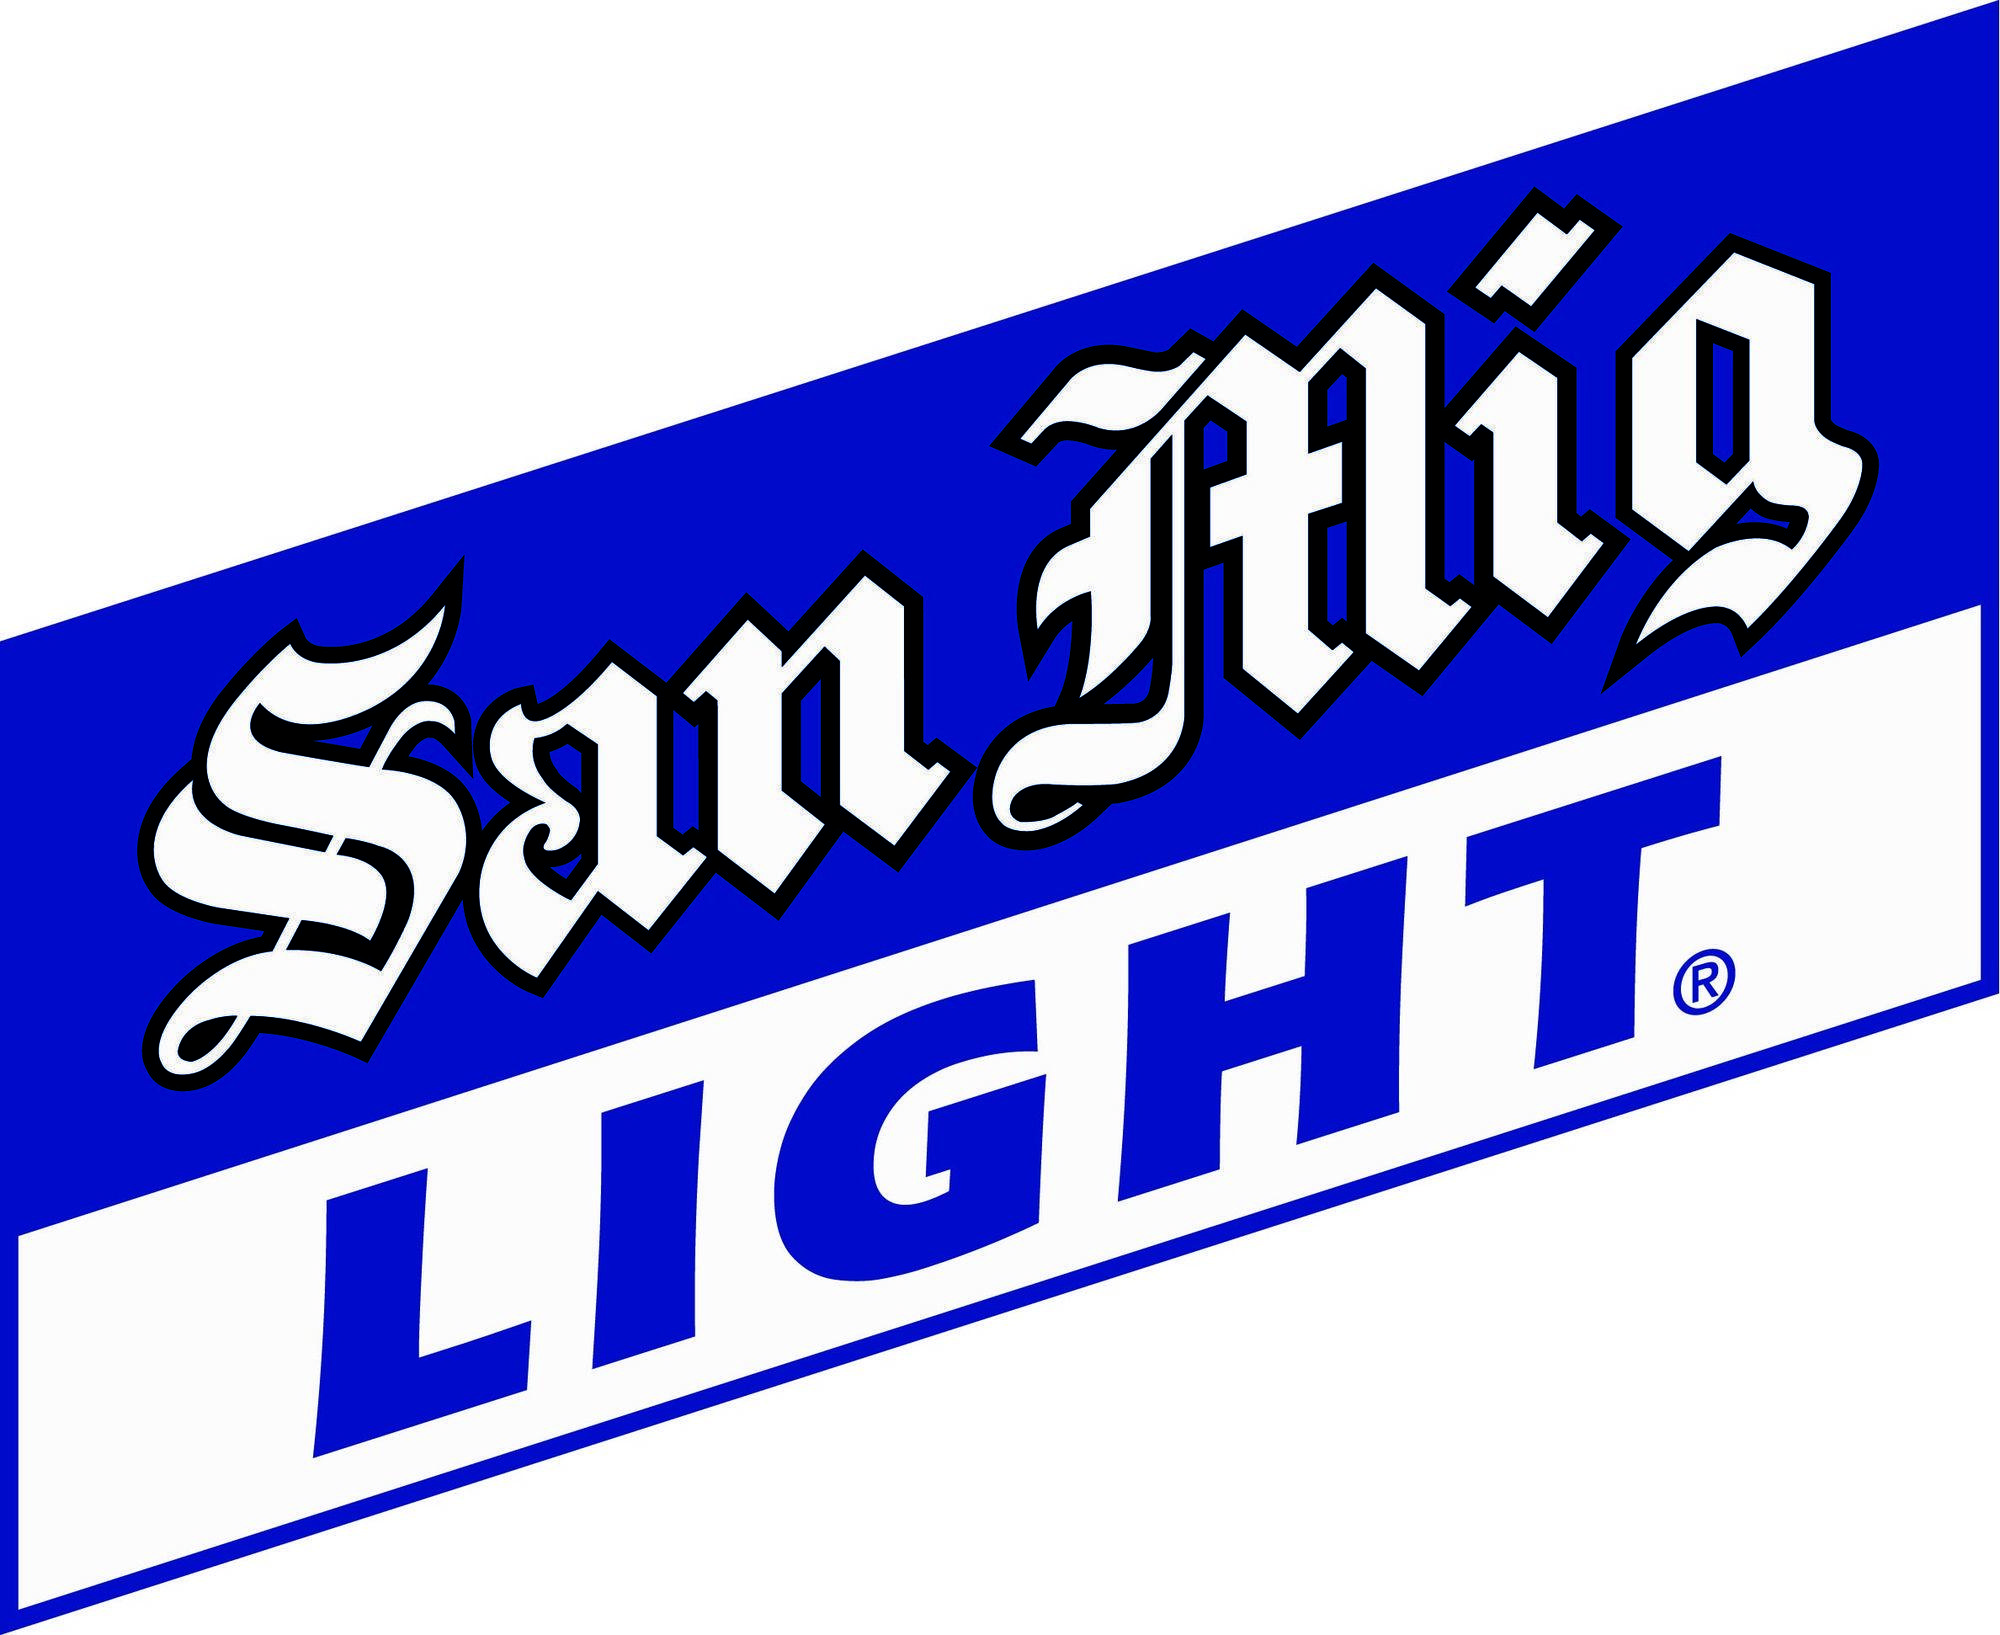 San Mig Light Logo - San Mig Light